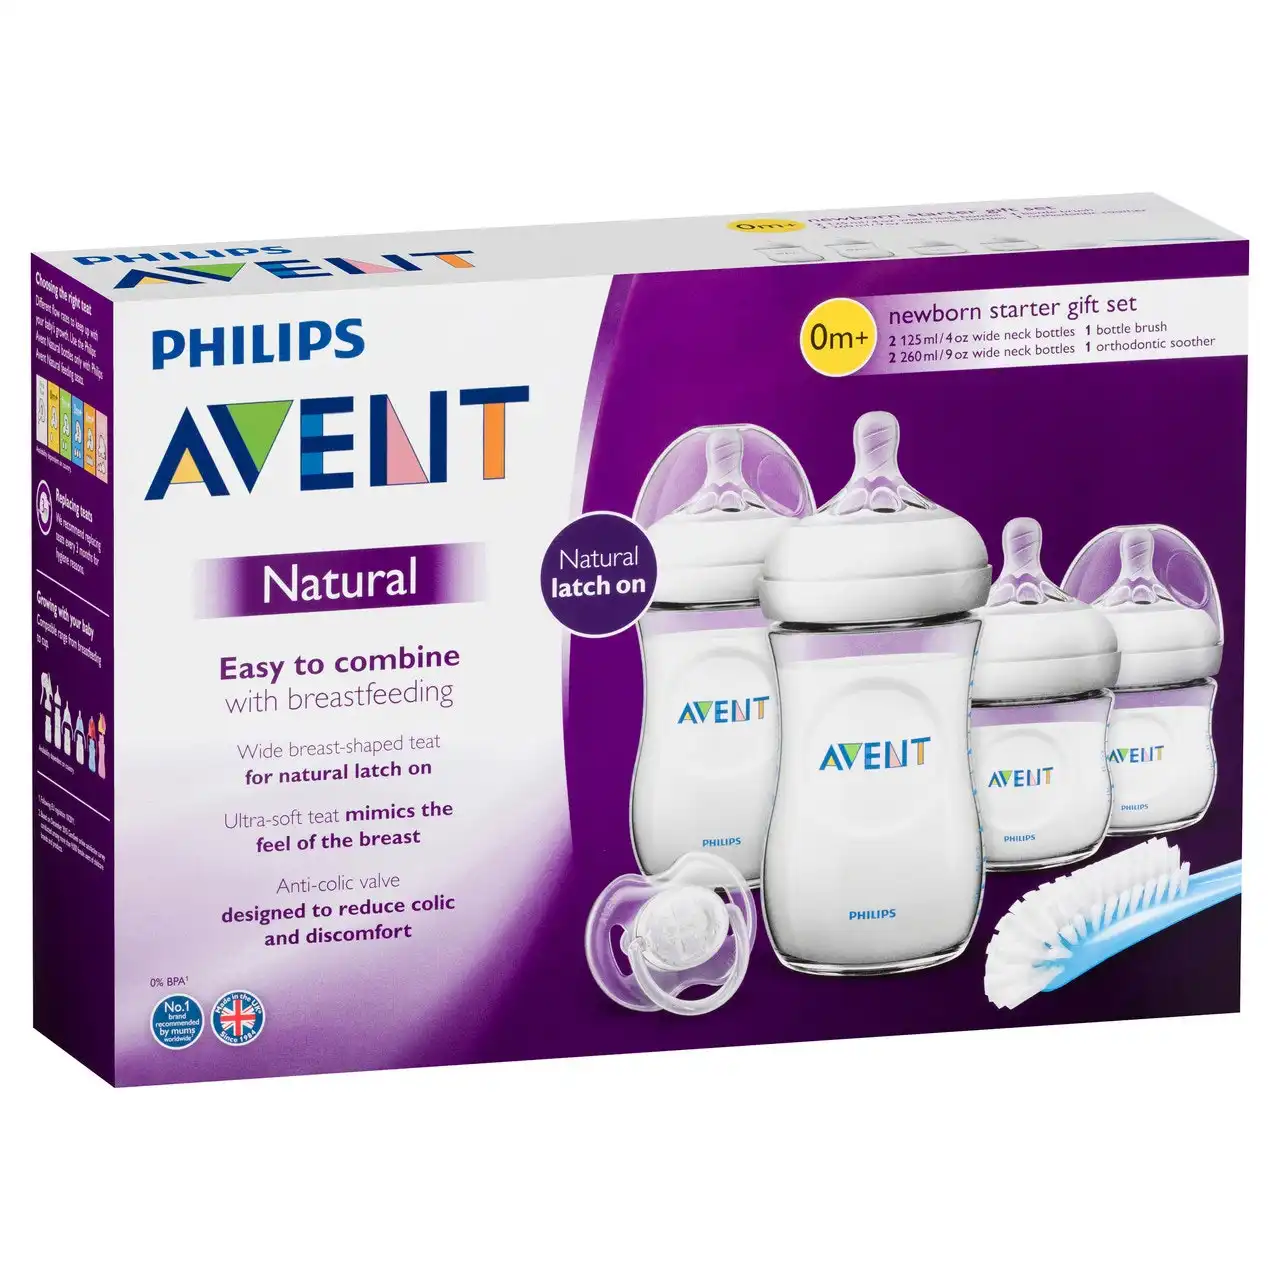 Philips Avent Natural Newborn Starter Gift Set